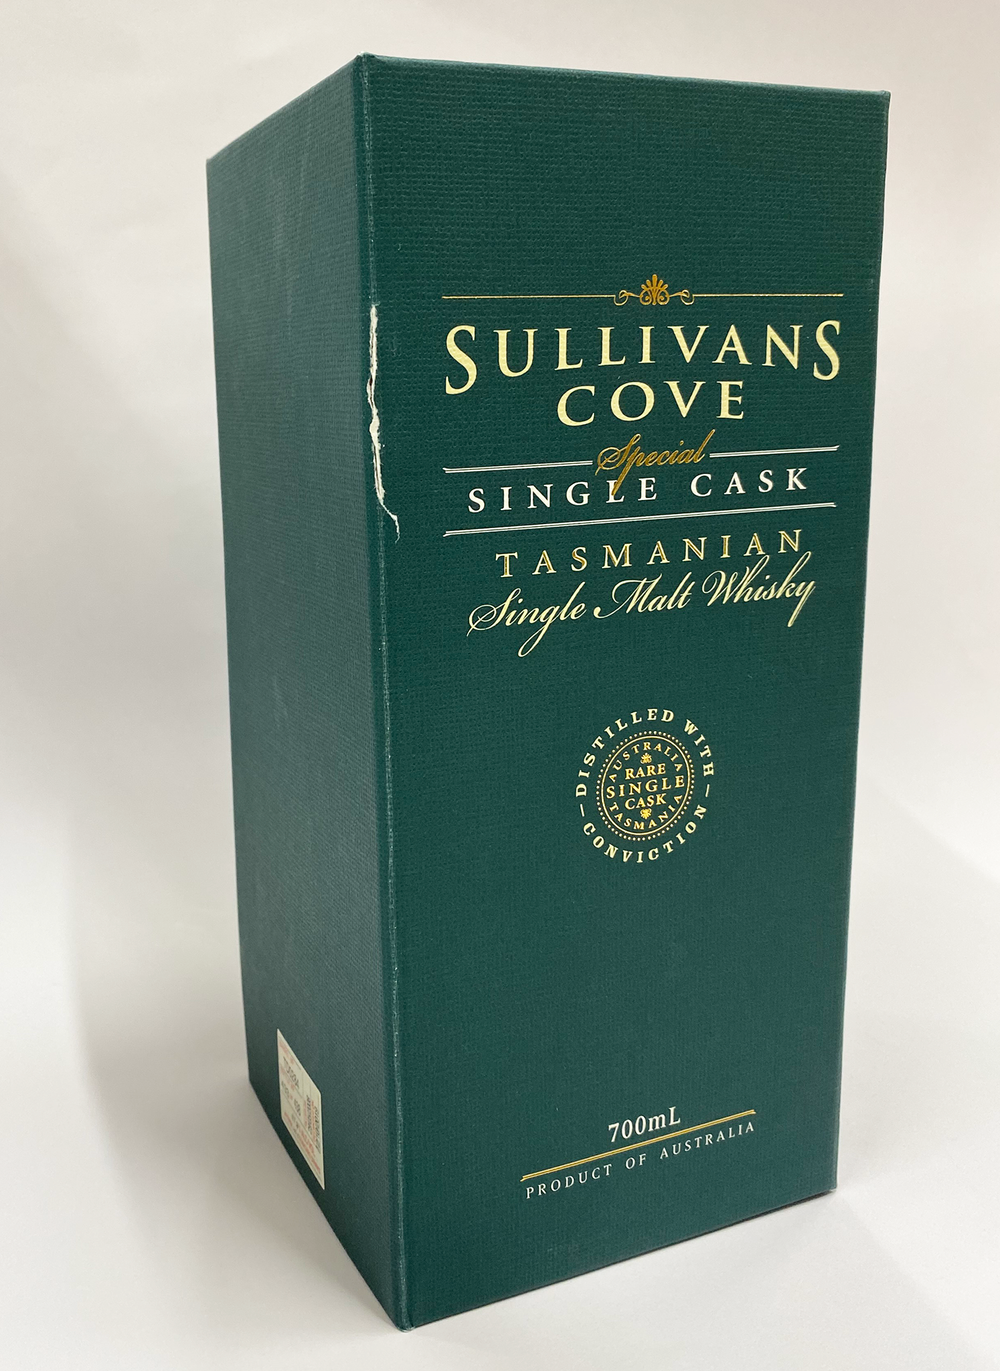 Sullivans Cove Special Single Cask Tasmanian Single Malt Whisky 700ml (TD0284)